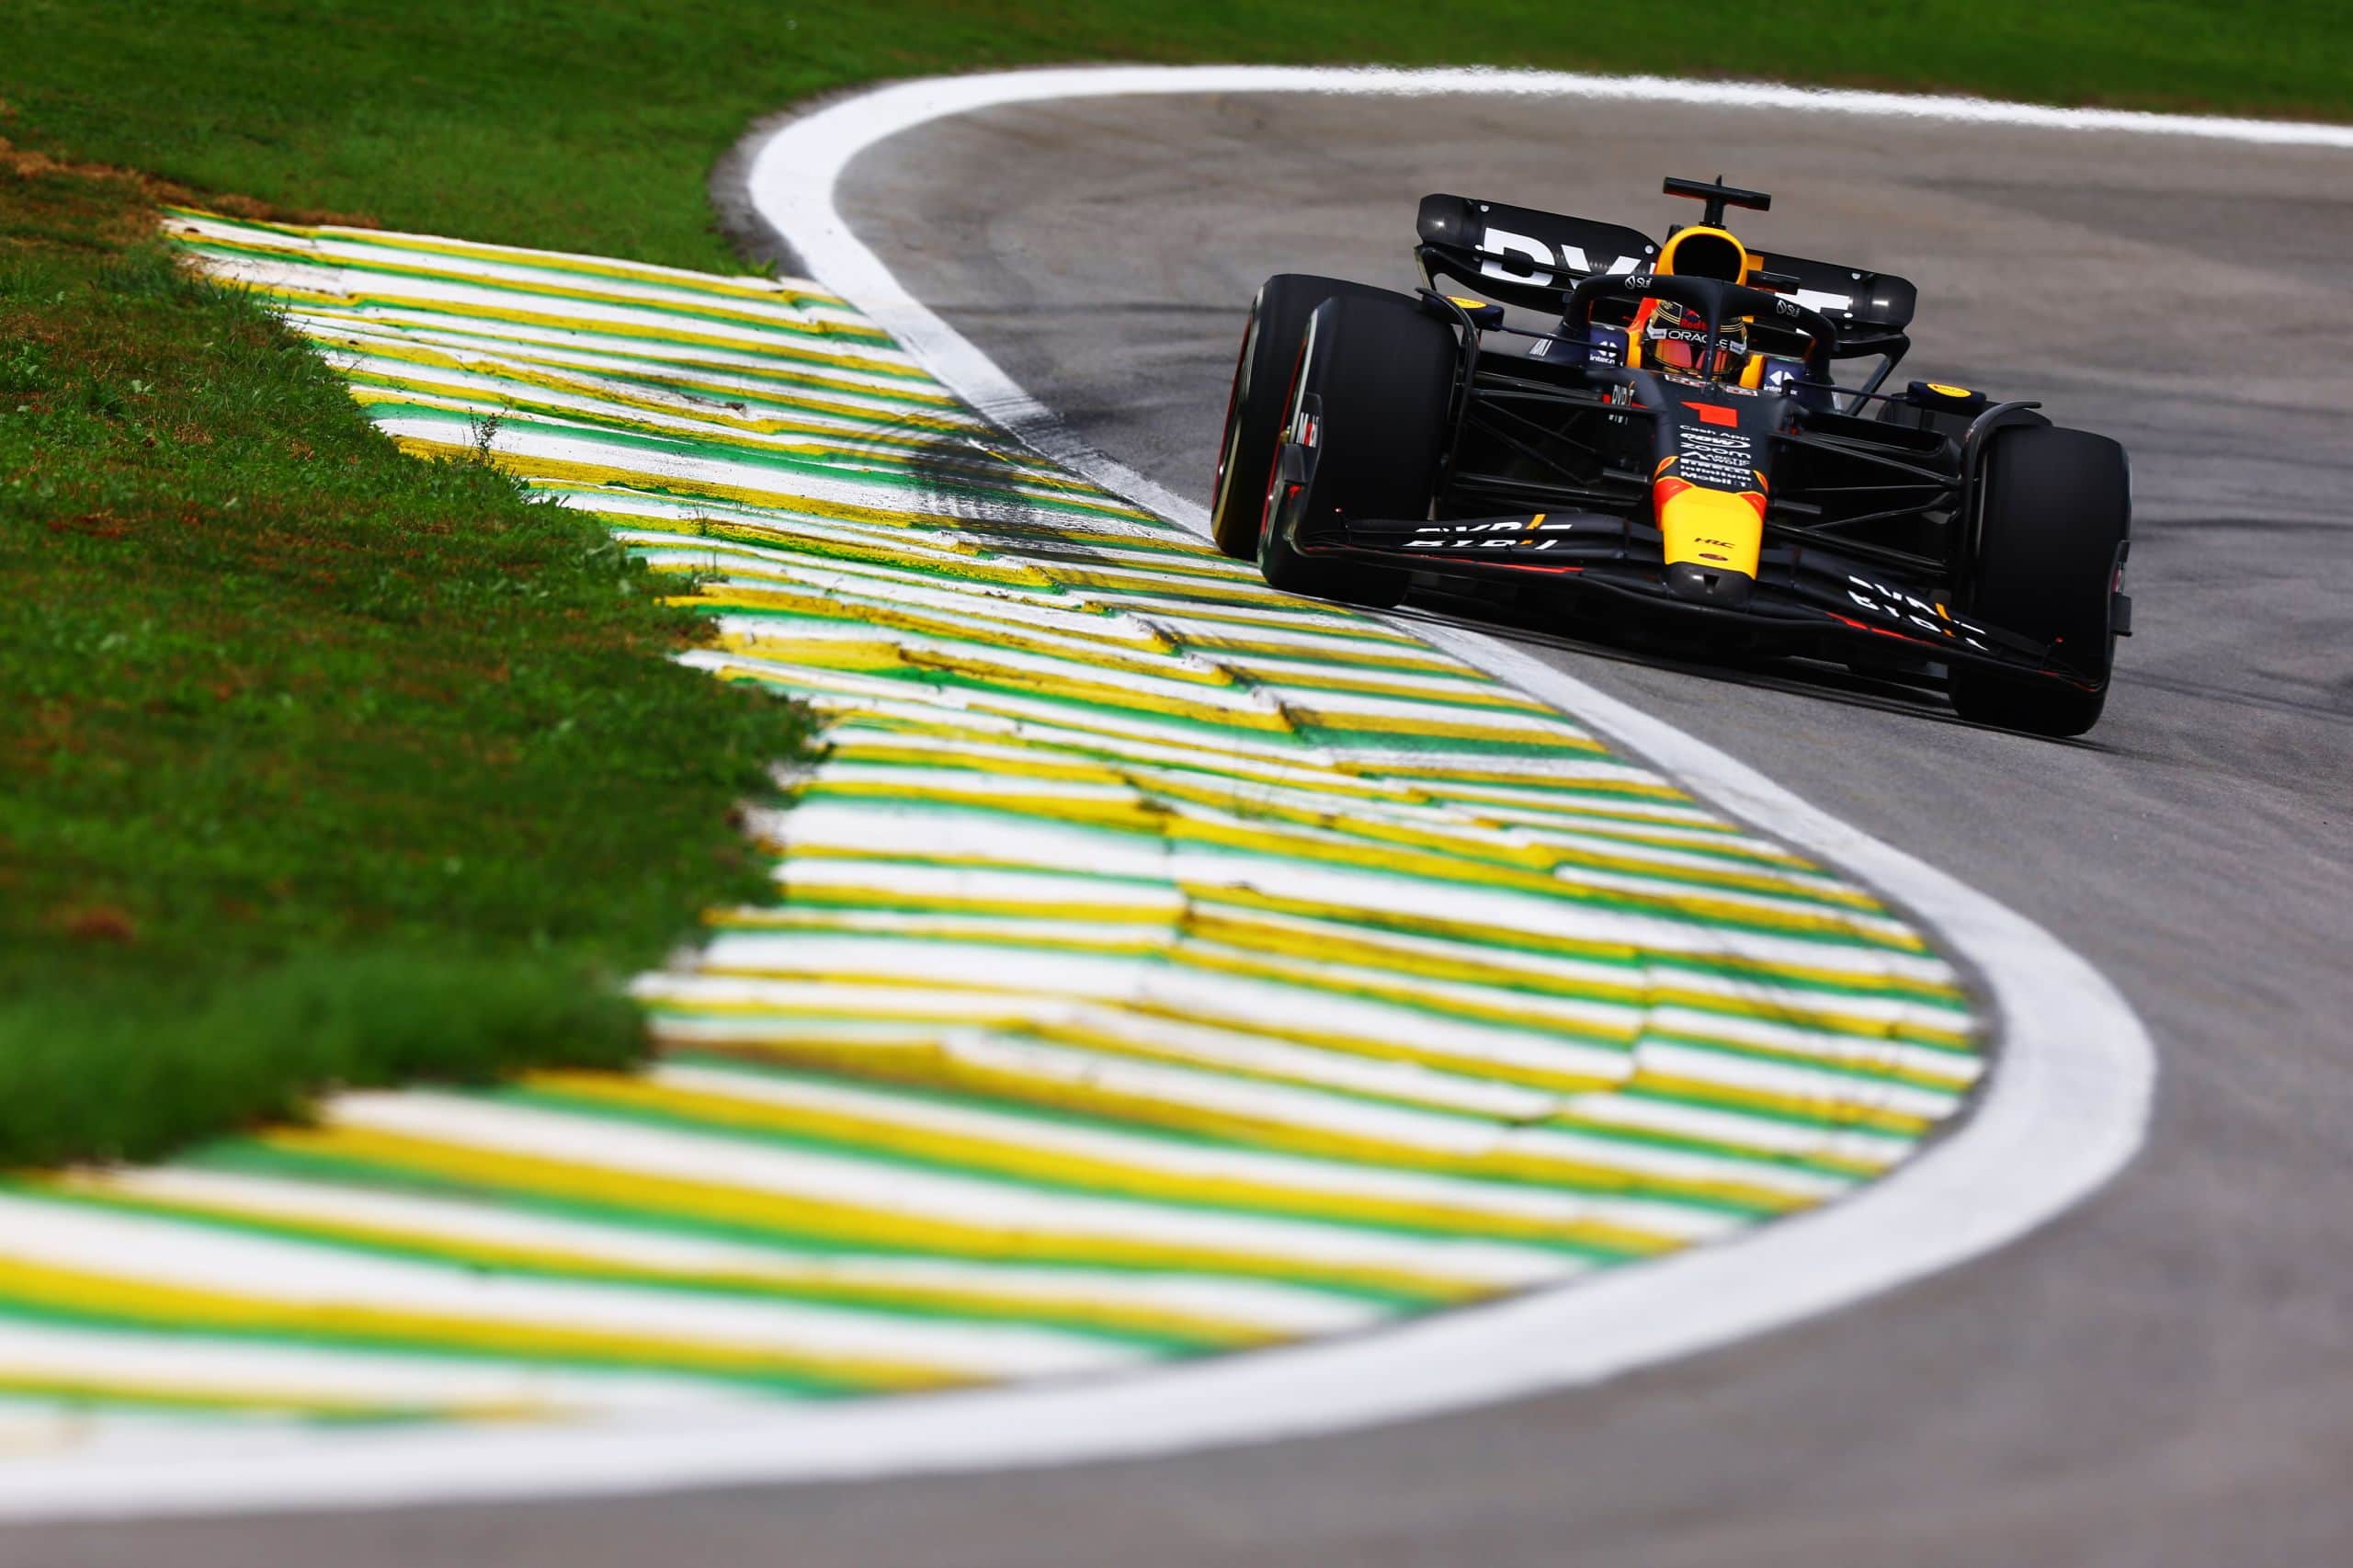 F1 Grand Prix Of Brazil Practice & Qualifying